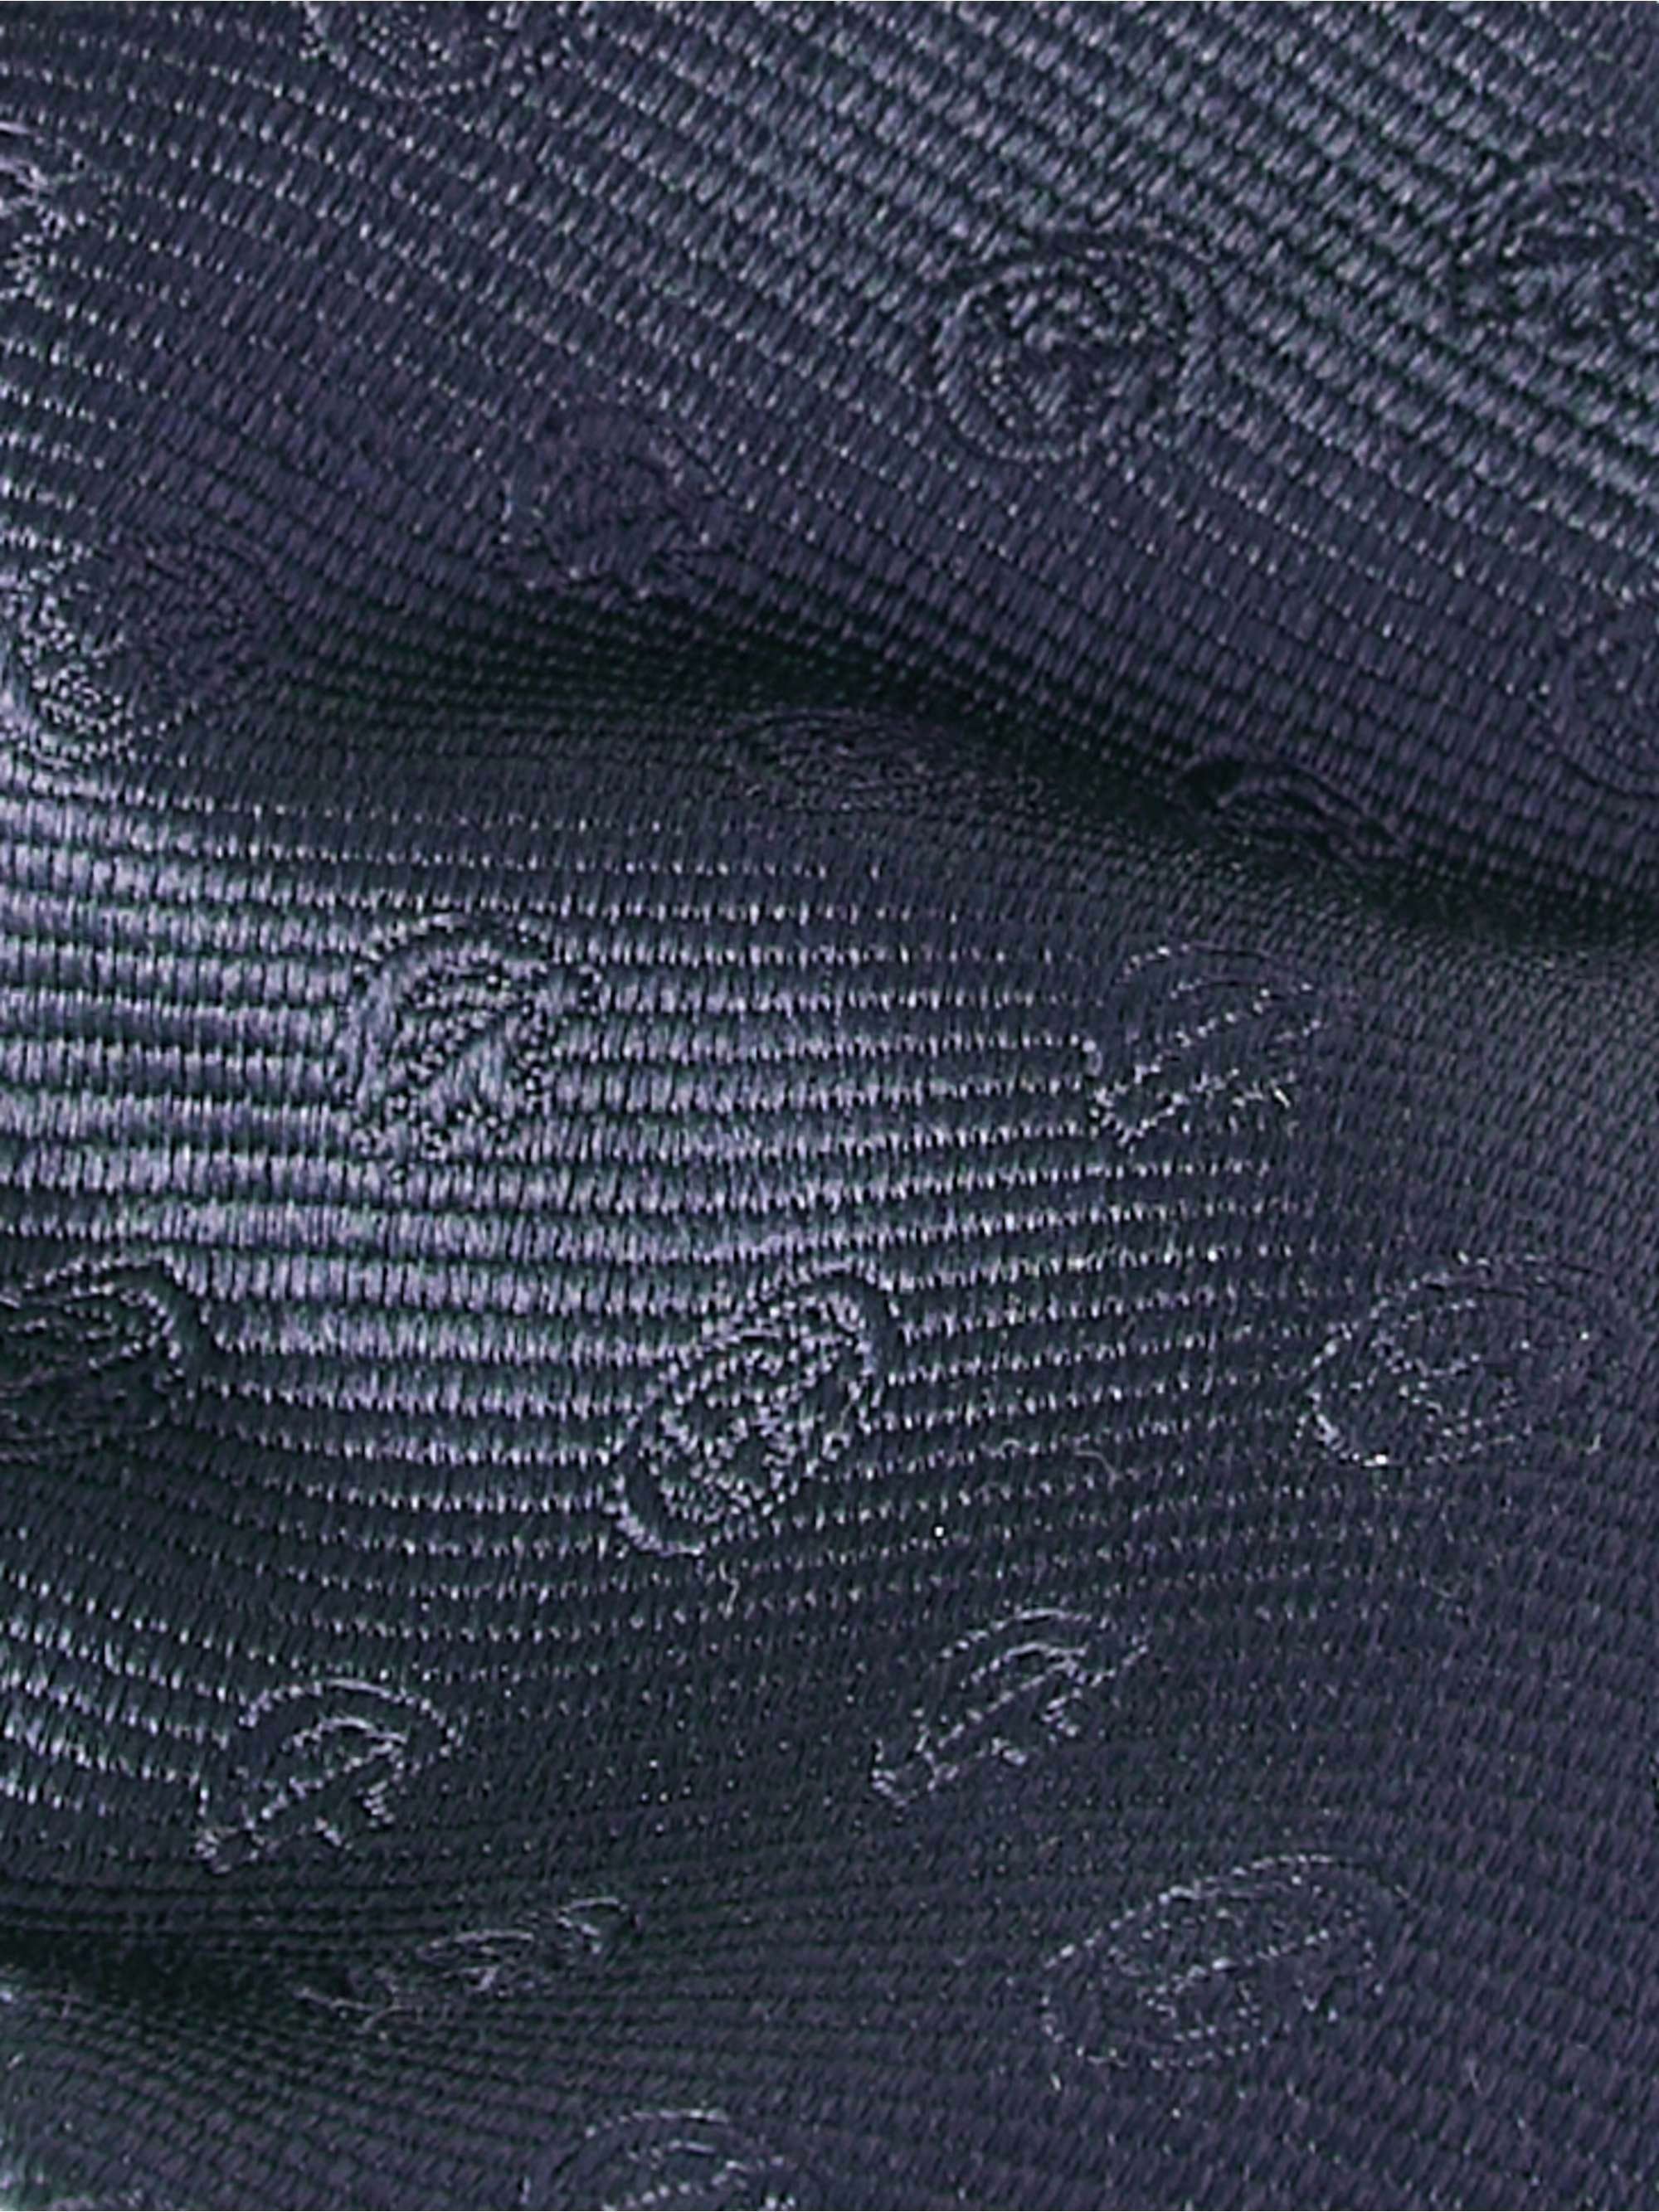 GUCCI 7cm Logo-Jacquard Silk Tie